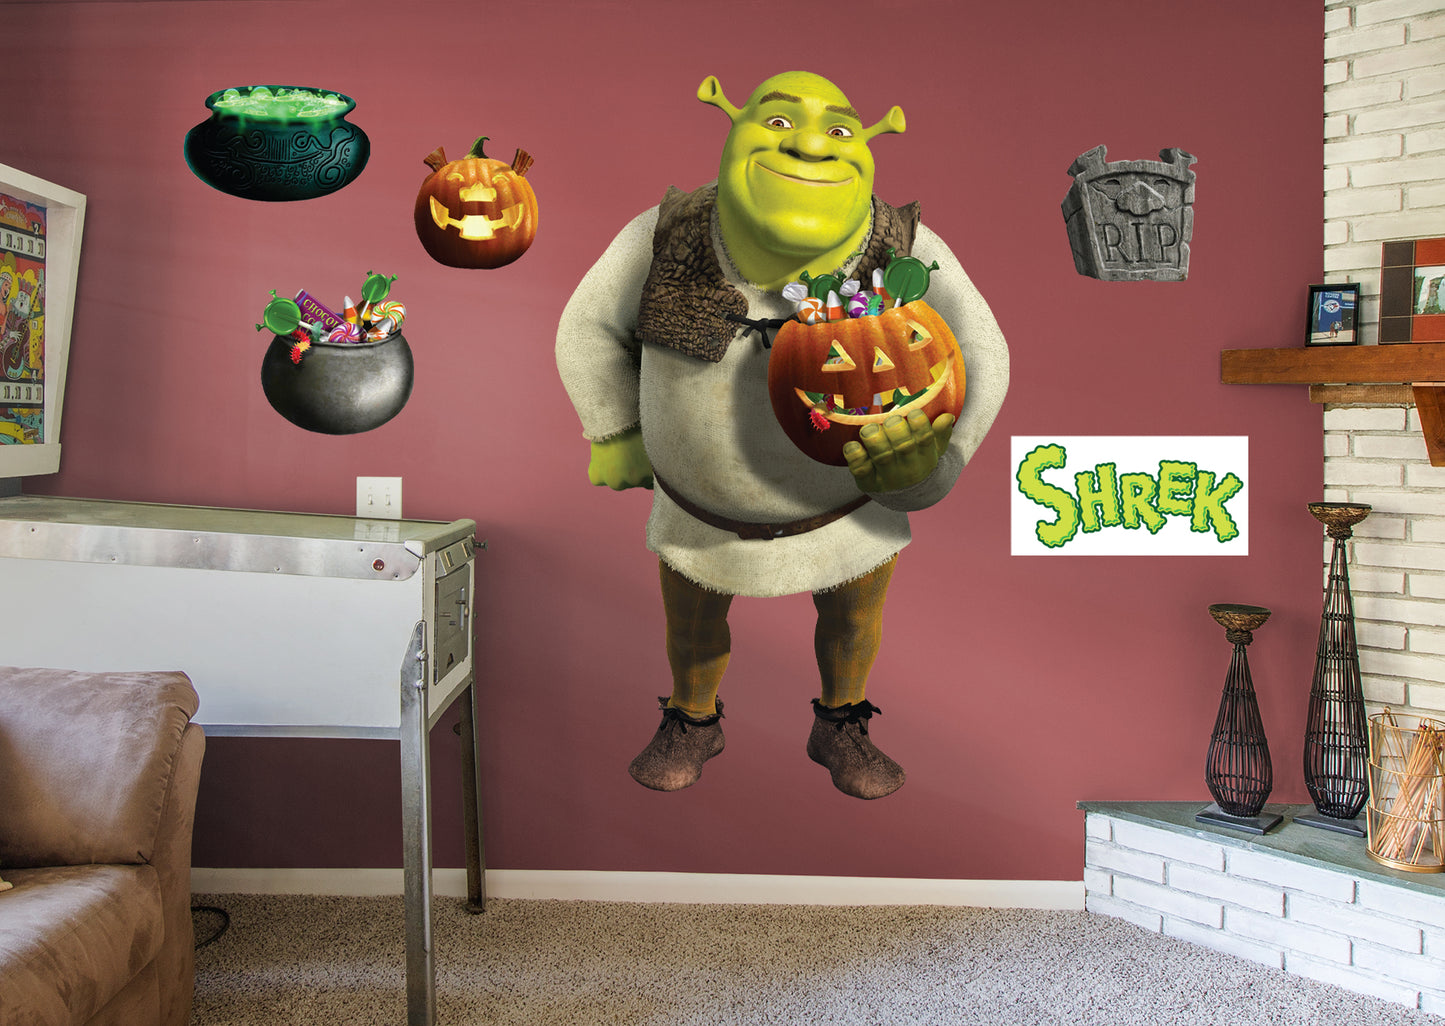 Shrek: Shrek Scared Shrekless RealBig - Officially Licensed NBC Universal Removable Adhesive Decal